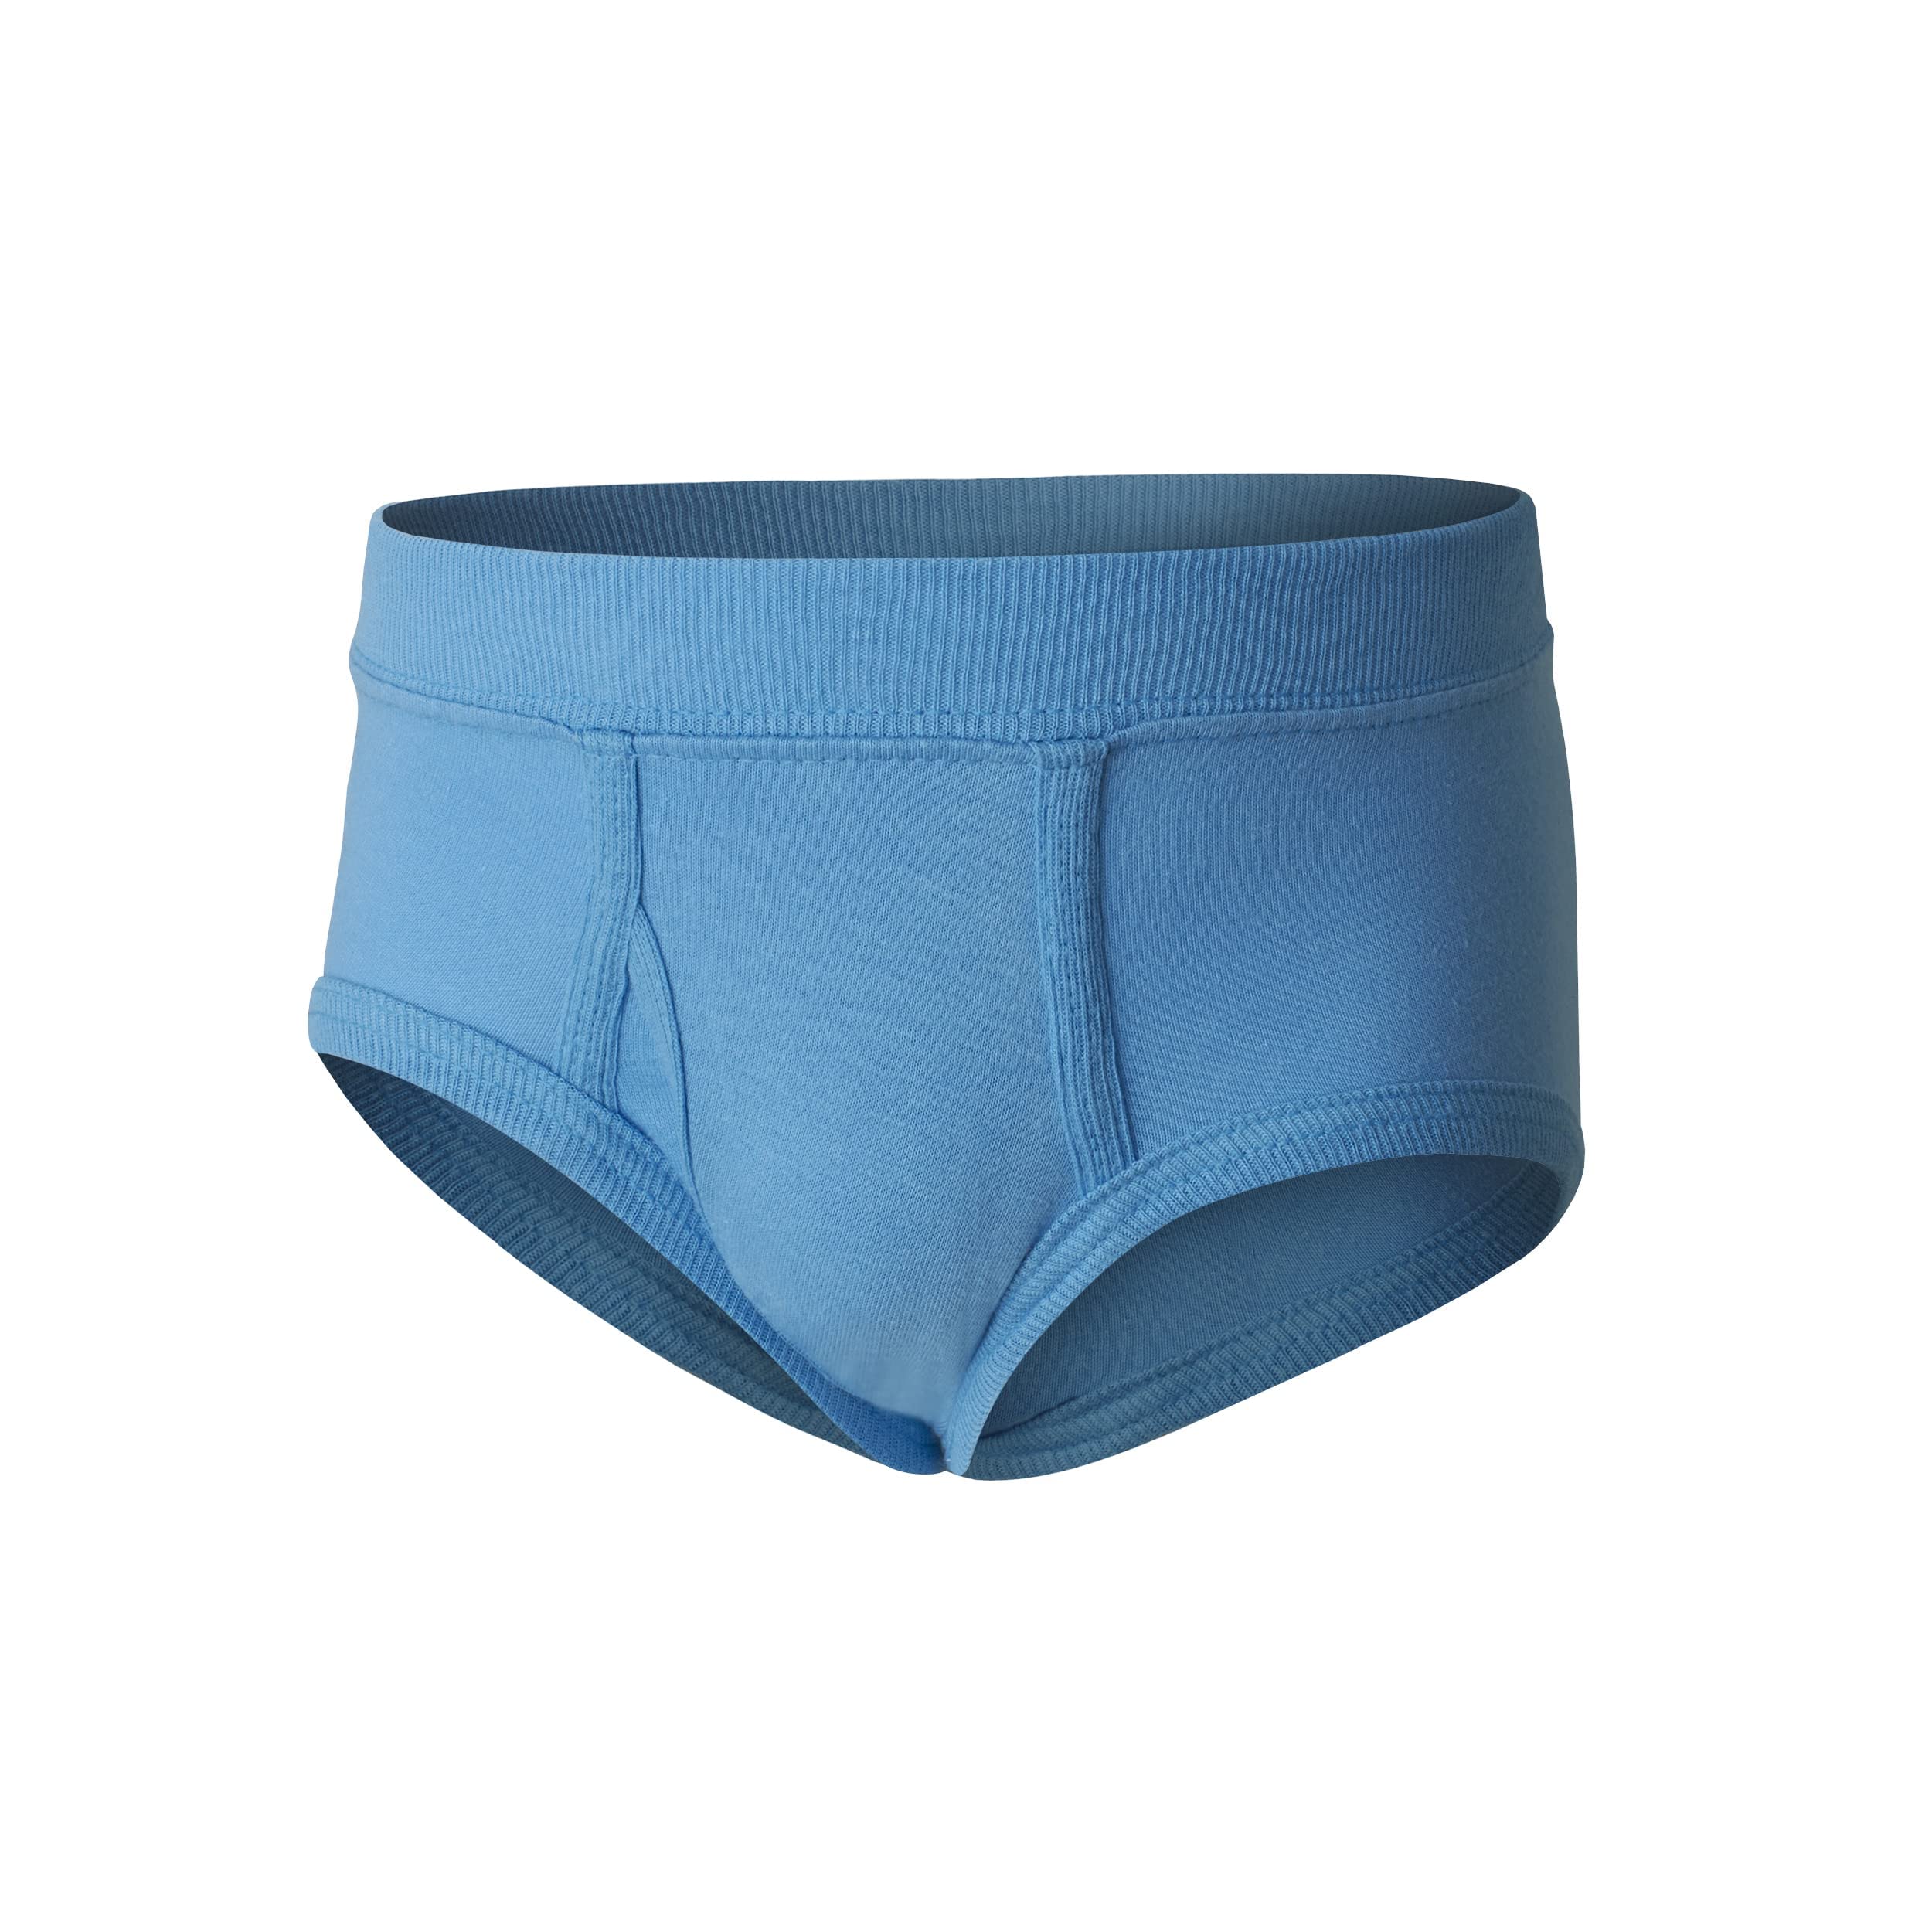 Hanes boys Pure Comfort Super Soft Tagless Smooth Underwear 10-Pack